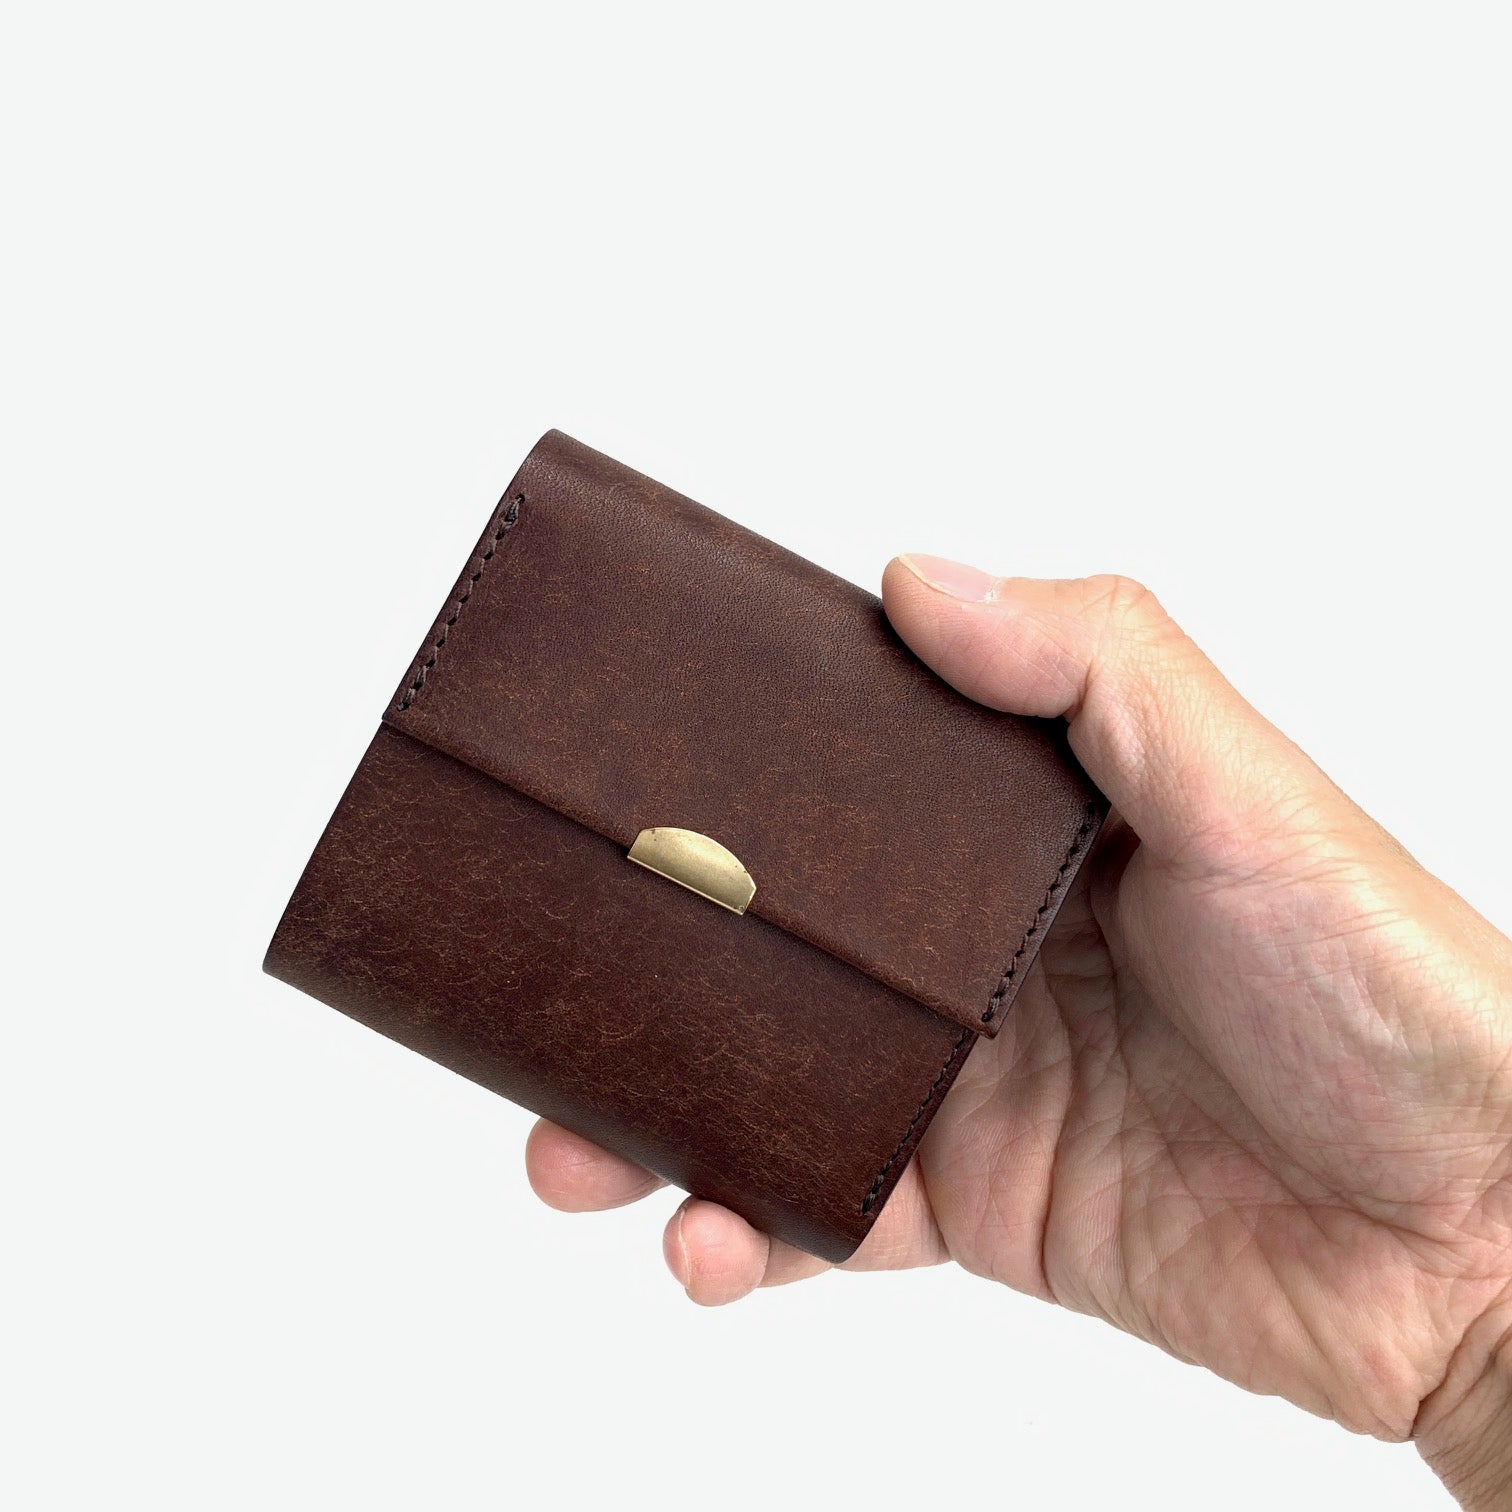 Anak Pueblo Leather Compact Wallet